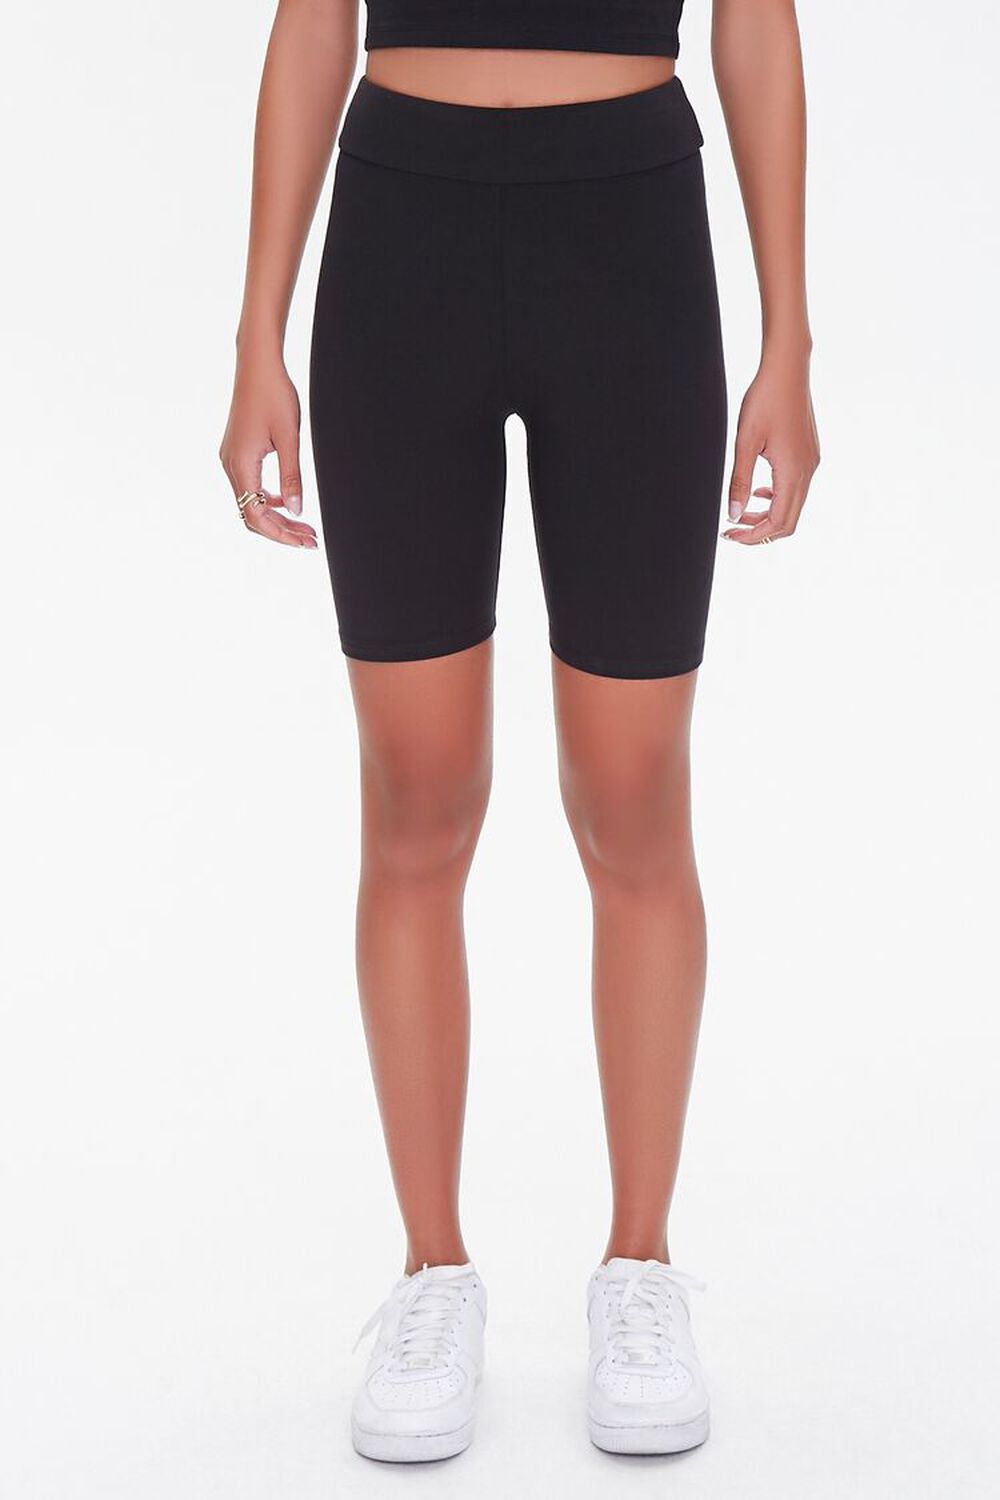 BLACK High-Rise Biker Shorts, image 2